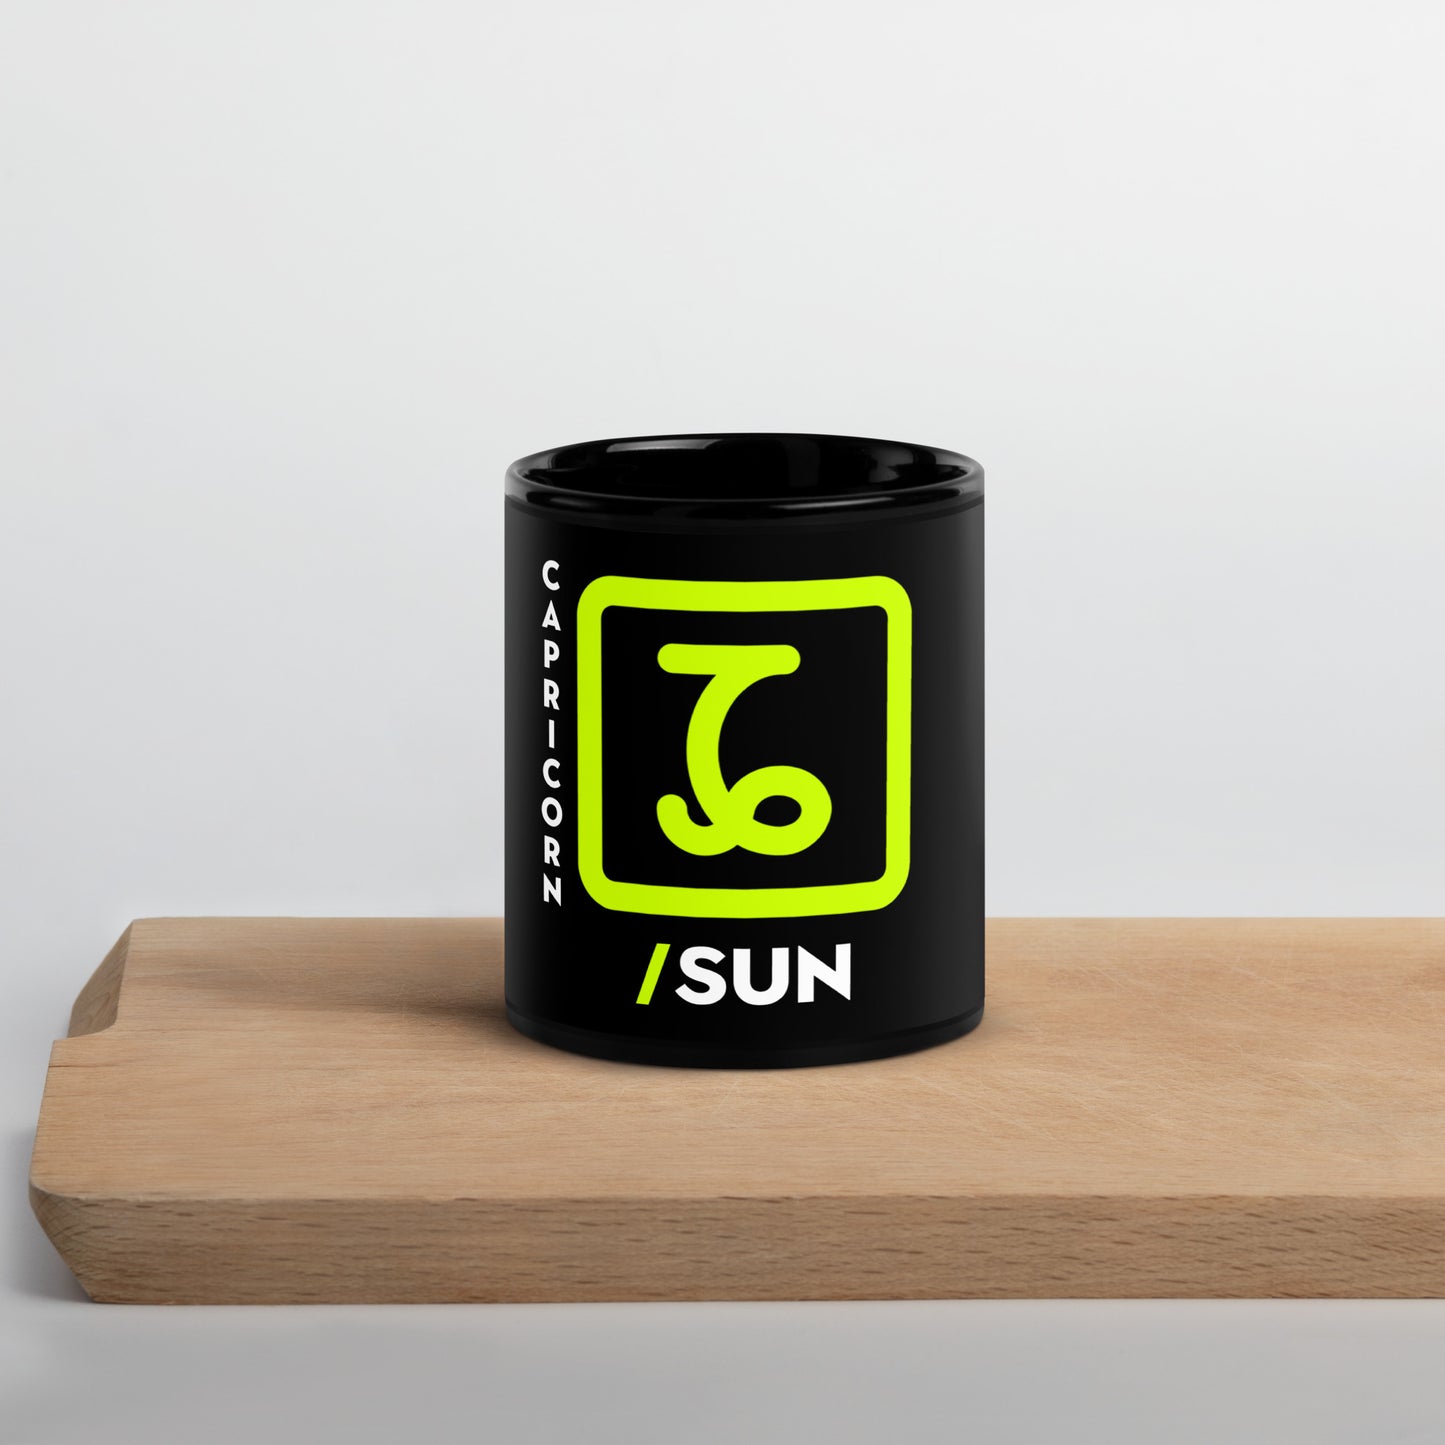 111 LIFE - CAPRICORN SUN ZODIAC - Black Glossy Mug